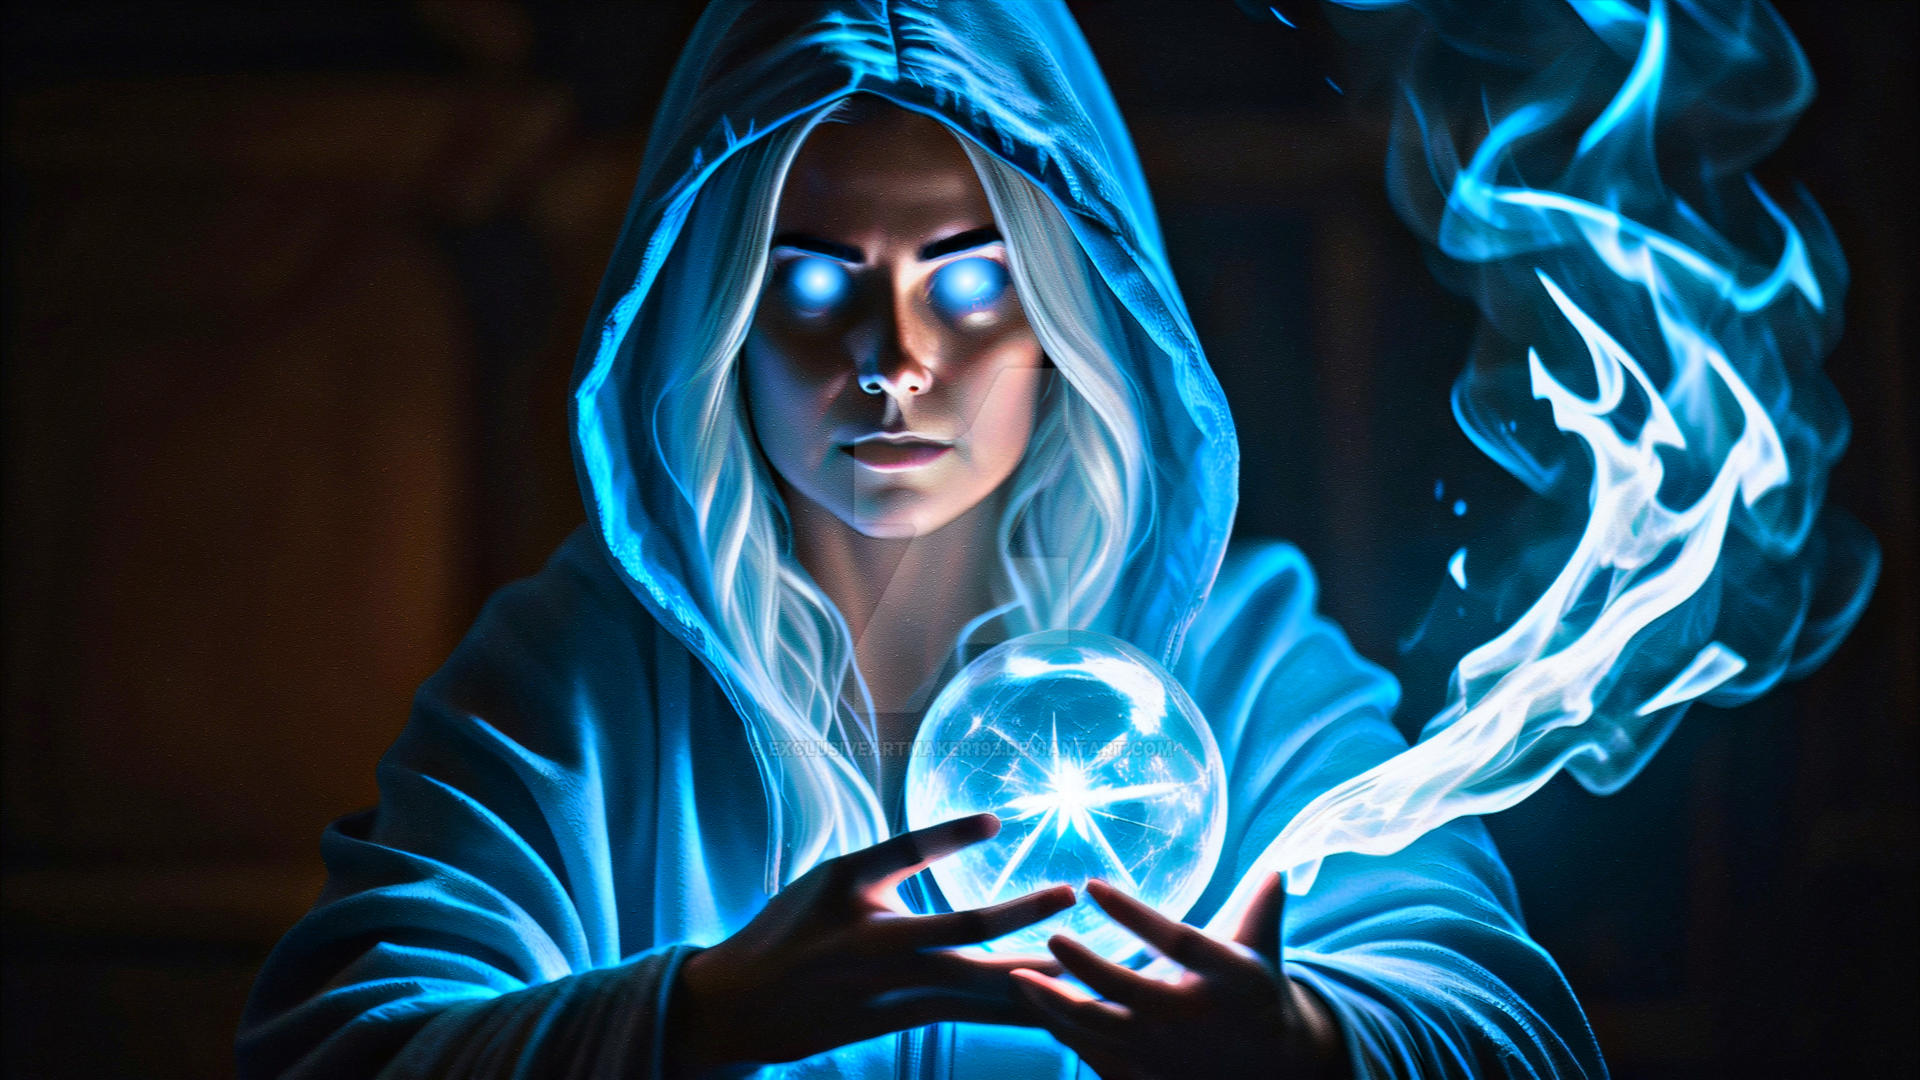 Mystical Blue Magic (No Official Title) by QuixoticDigitalz on DeviantArt